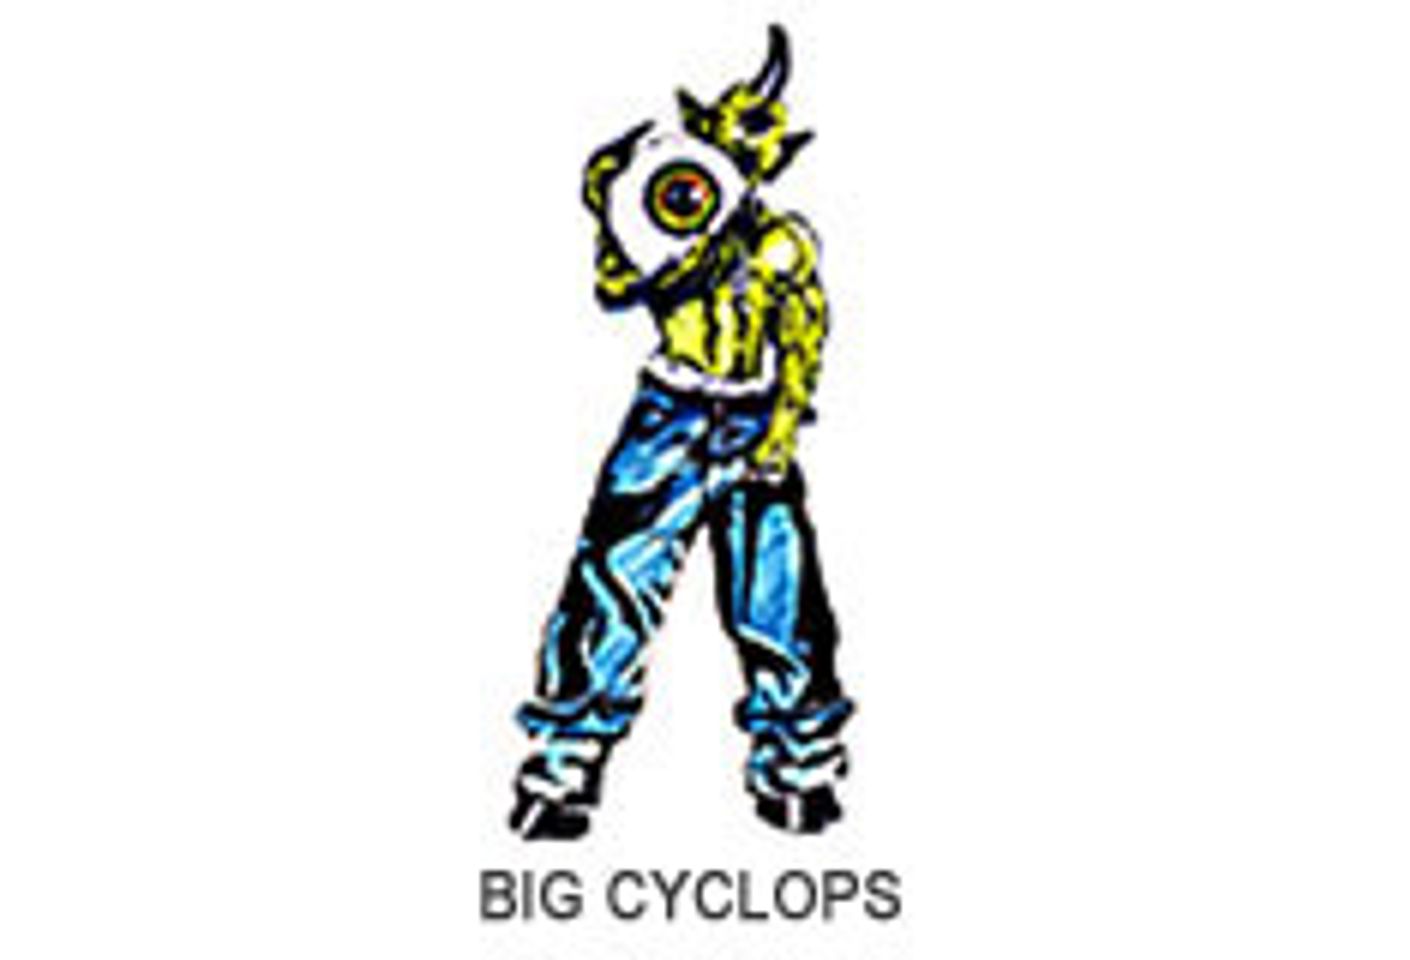 Big Cyclops Debuts With Self-Suck Title